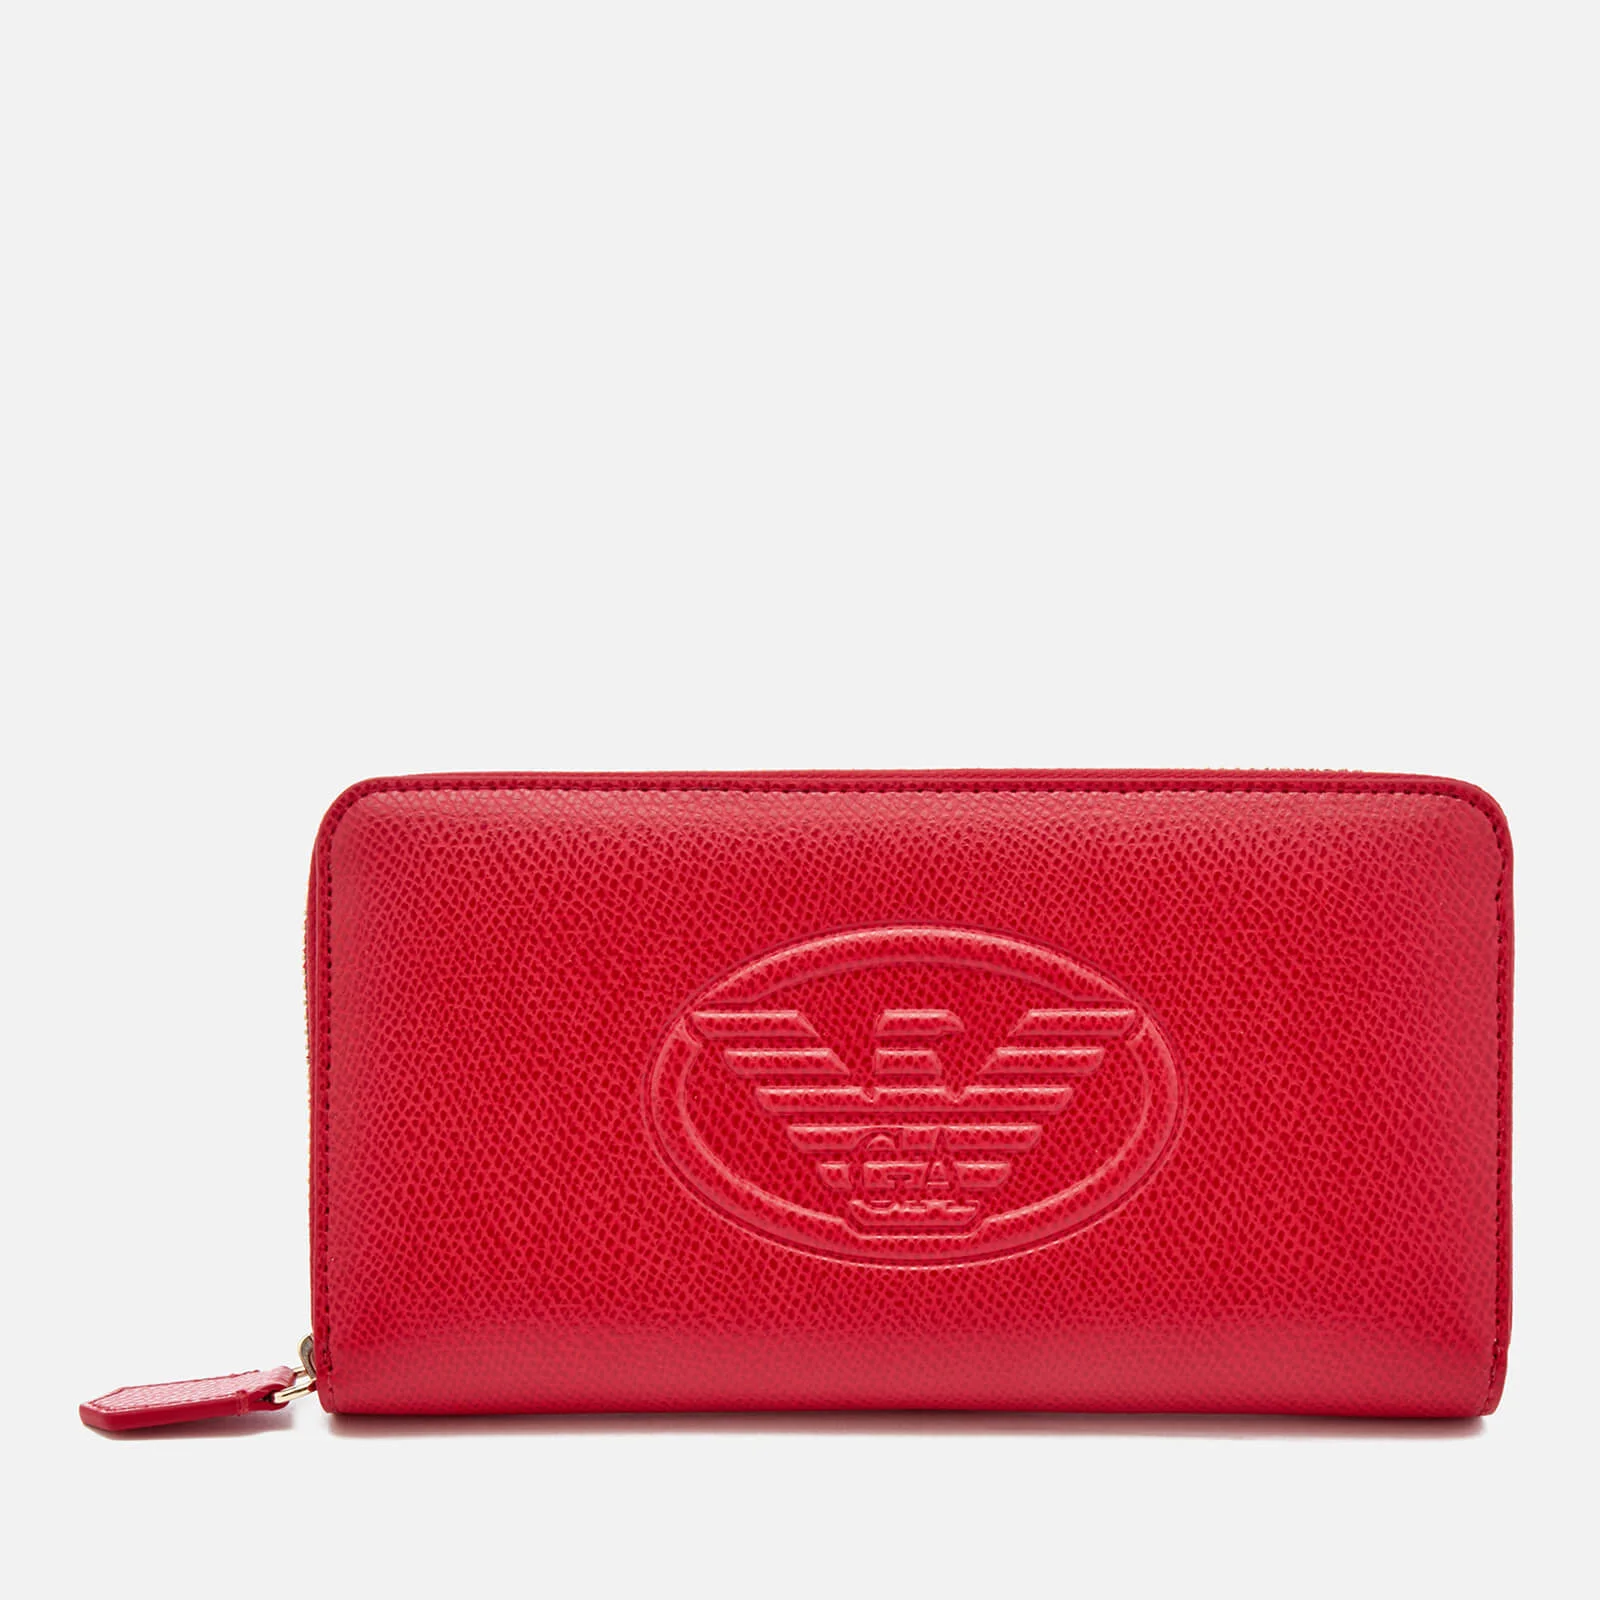 Emporio Armani Women's Zip Around Wallet - Red Image 1